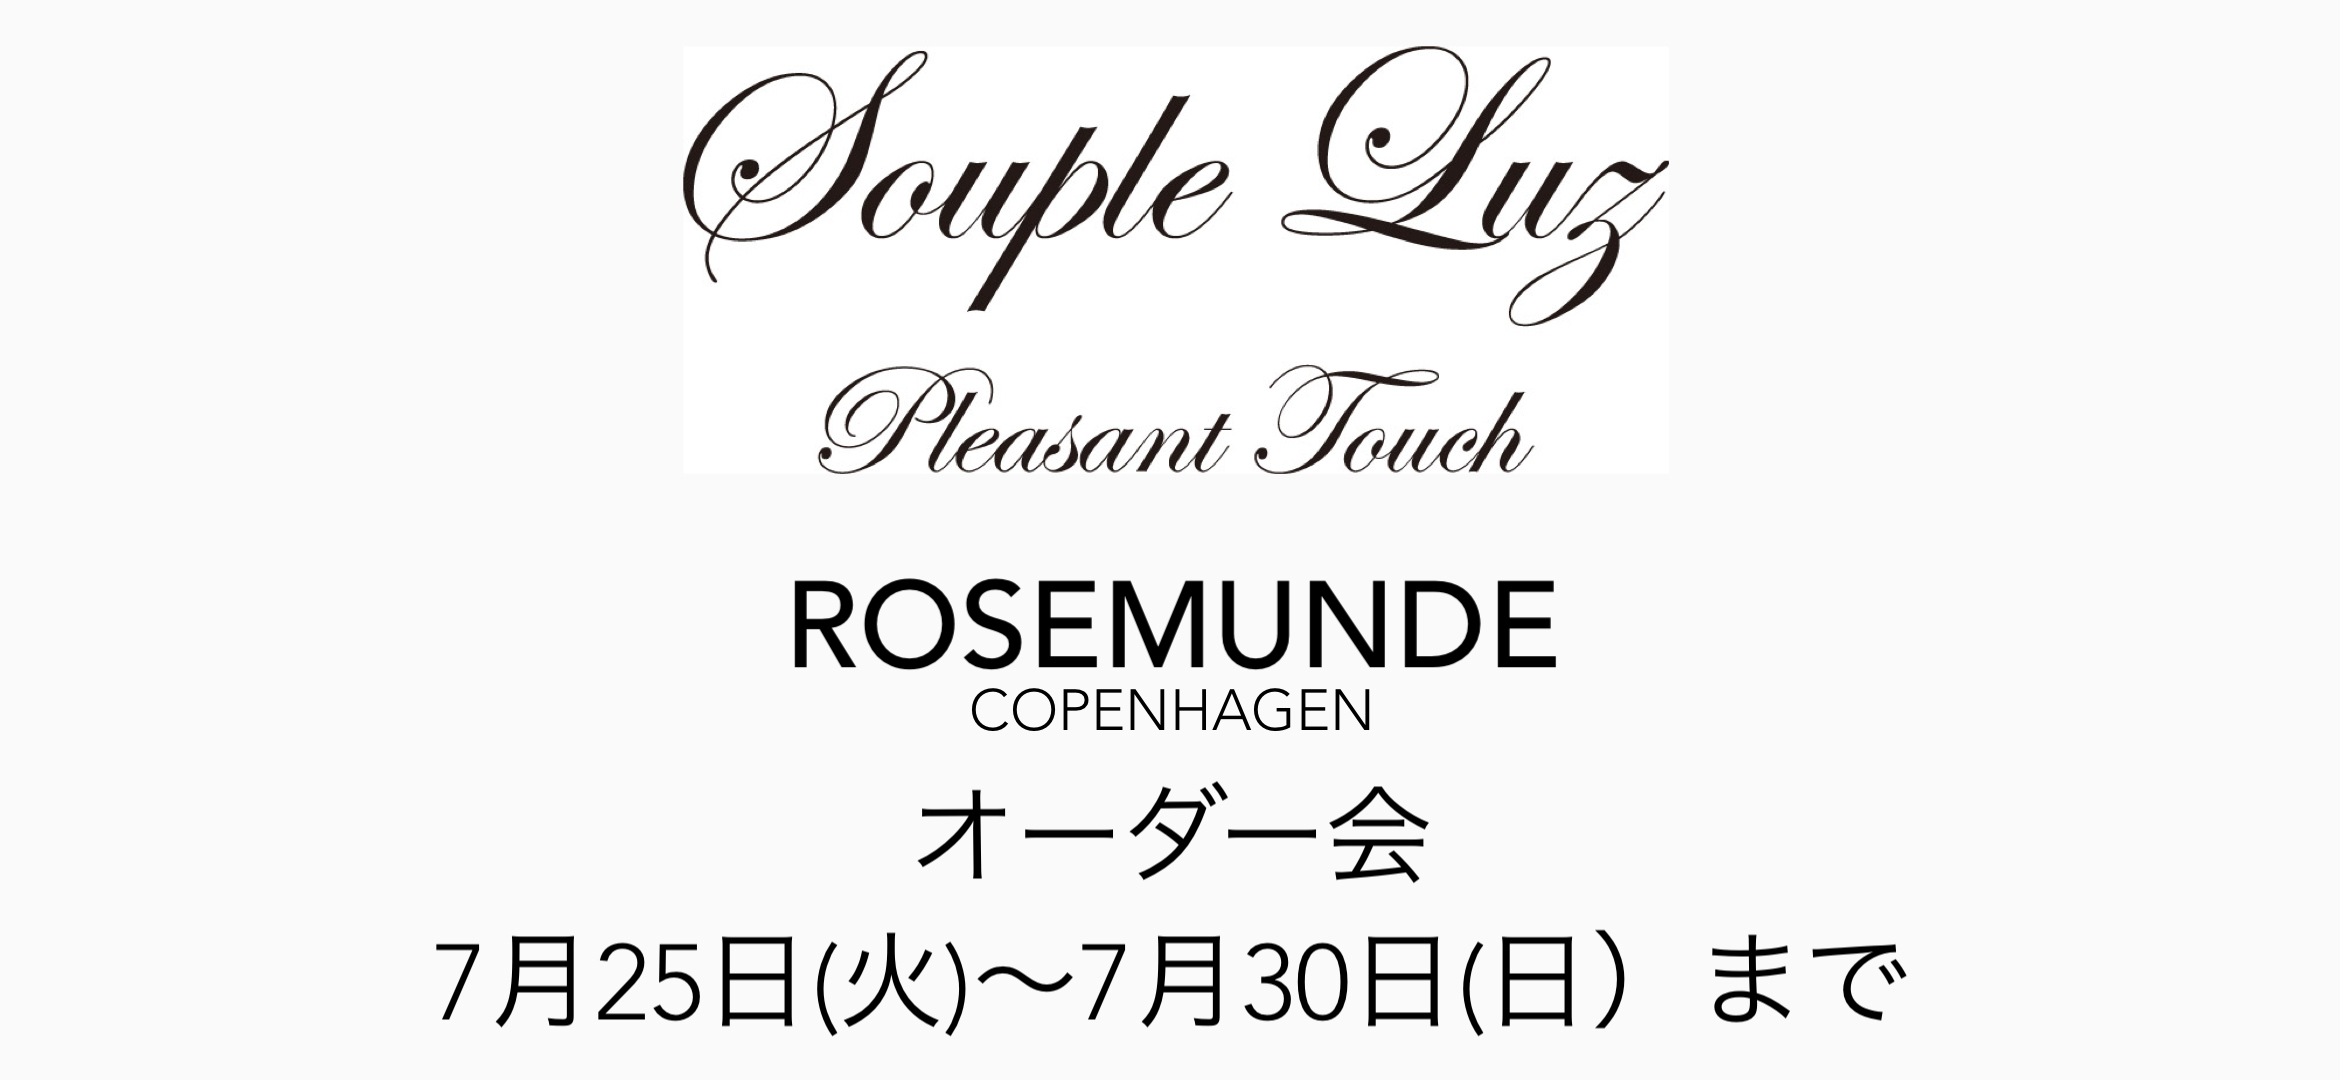 soupleluz&rosemund pop upのお知らせ_c0227612_09350432.jpg